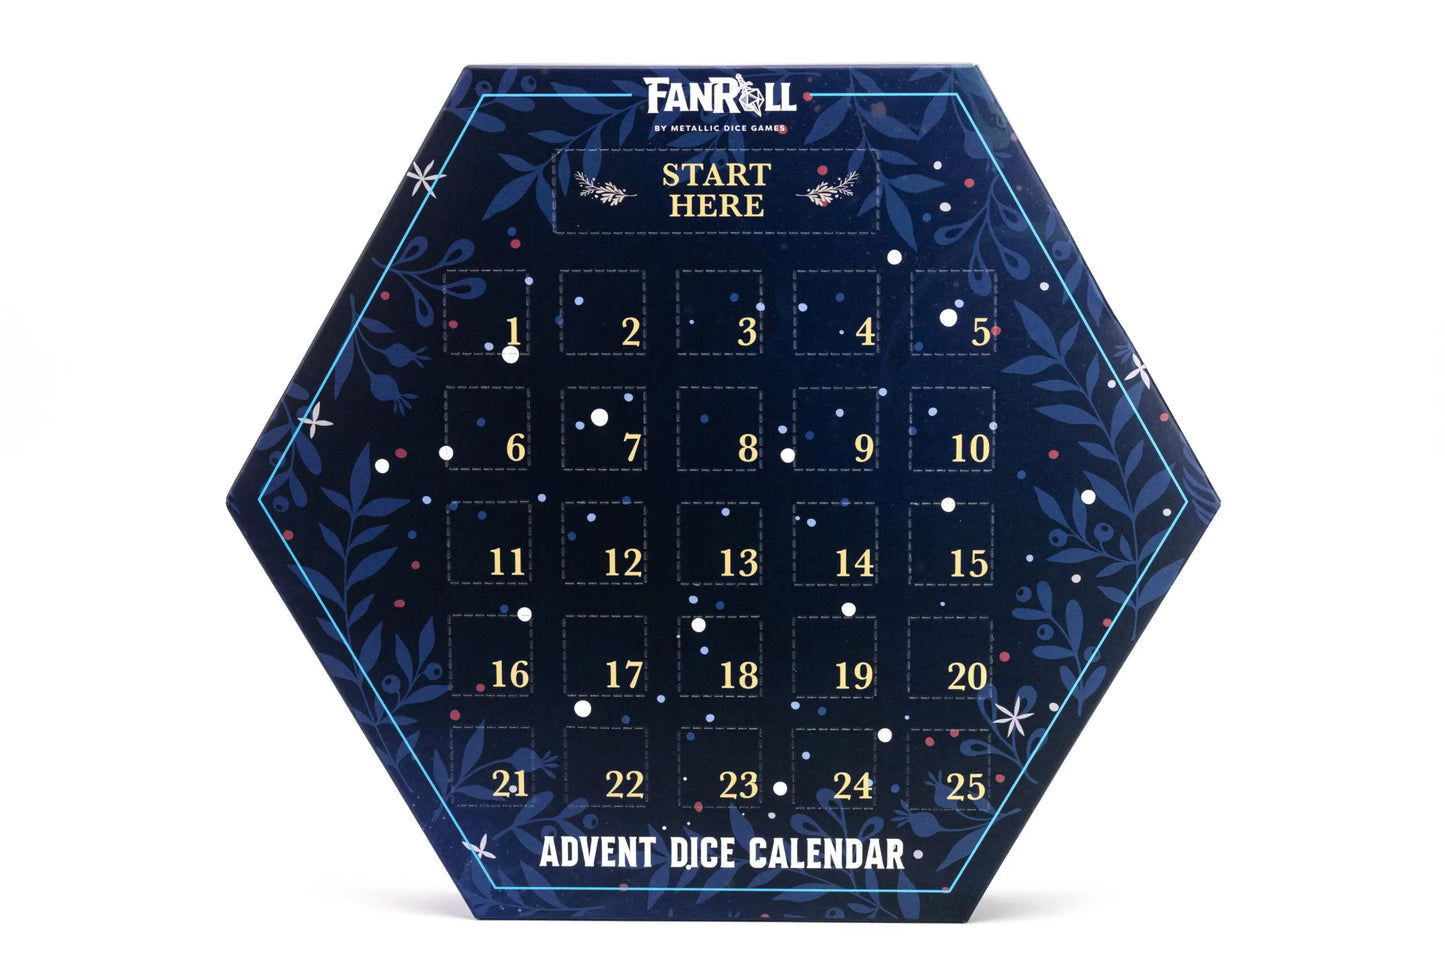 Fan Roll Advent Dice Calendar